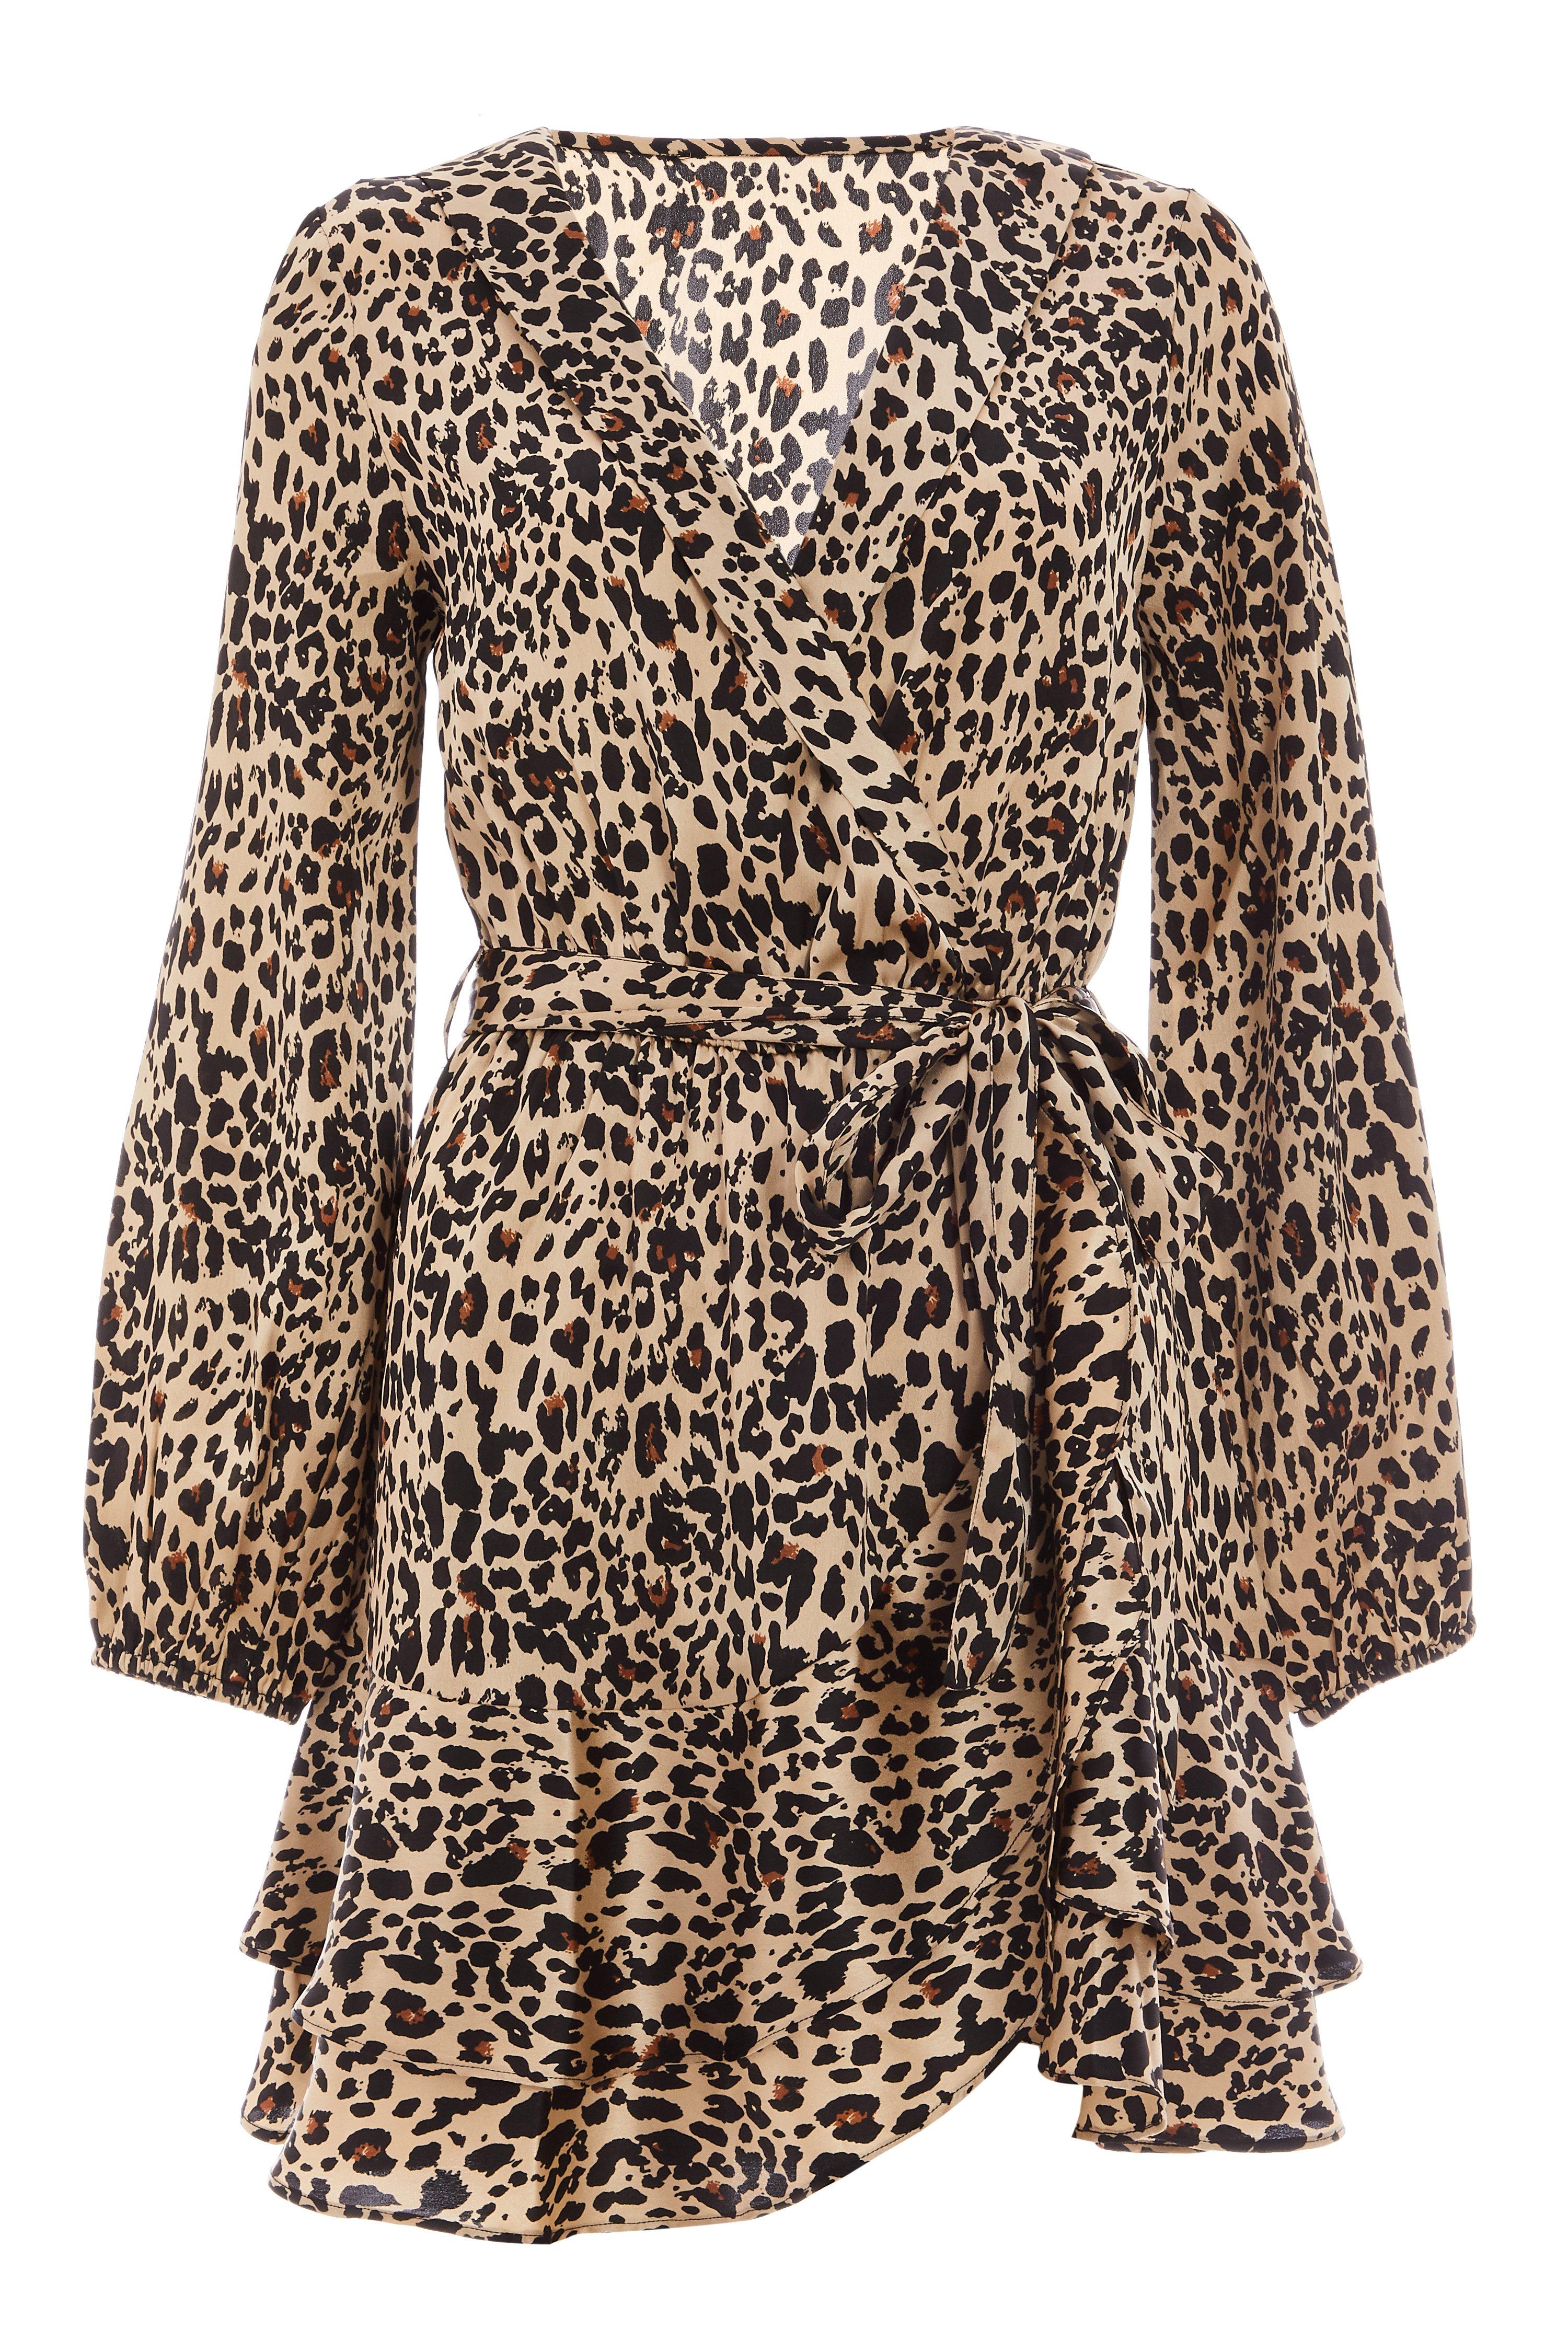 Brown Satin Leopard Print Dress - Quiz Clothing